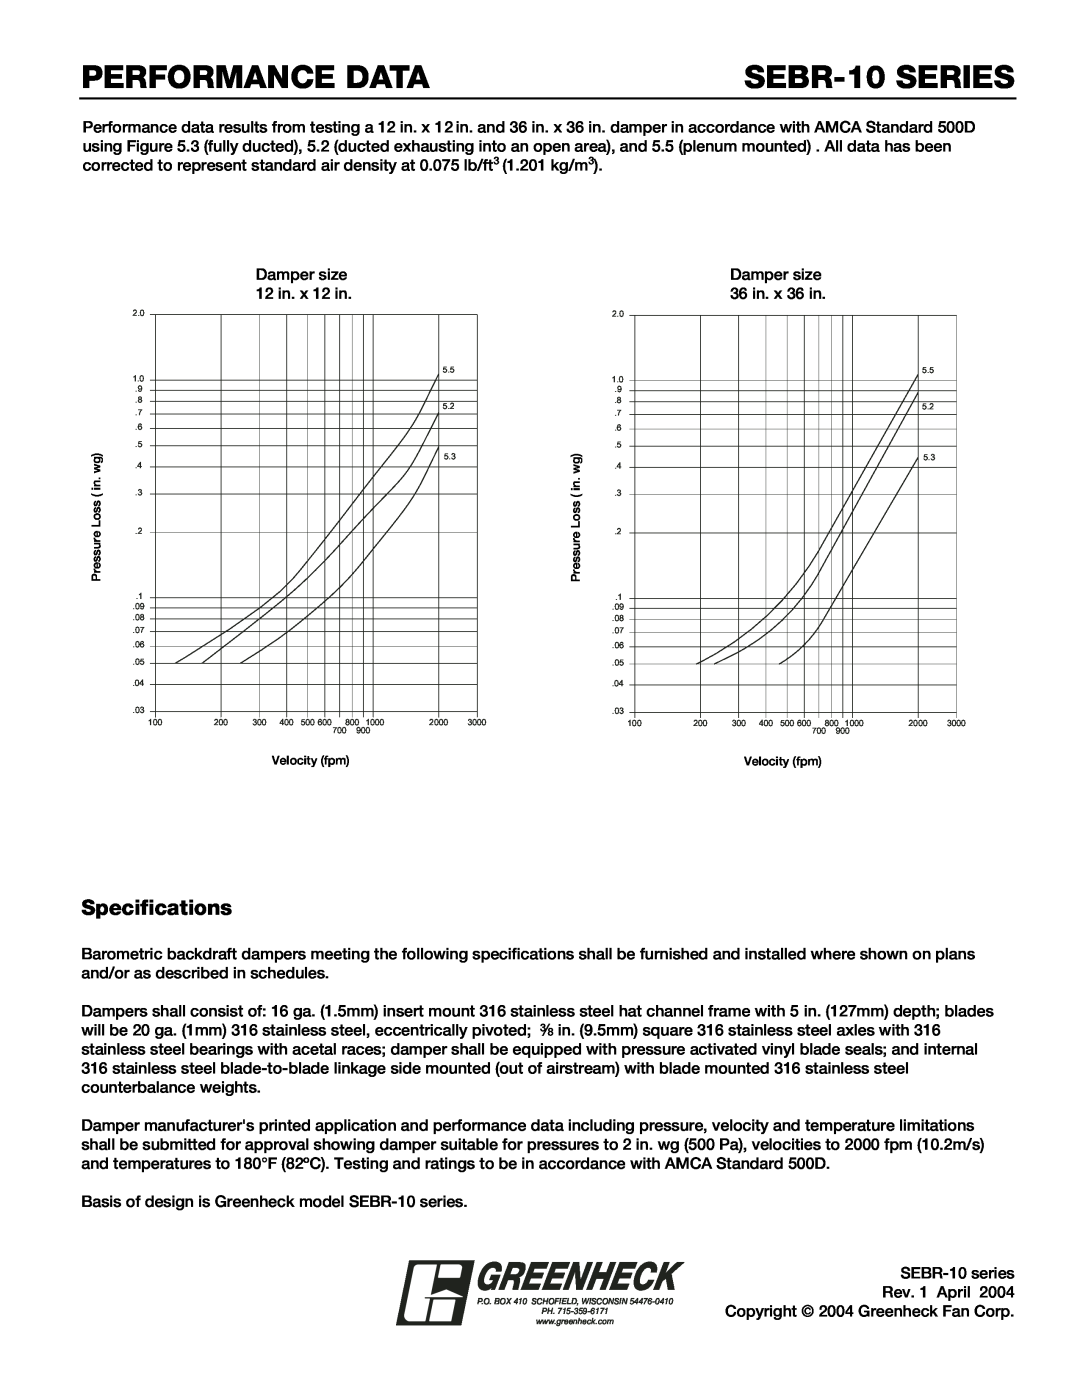 Greenheck Fan Specifications, Performance Data, SEBR-10SERIES, Greenheck, Damper size, 12 in. x 12 in, Rev. 1 April 